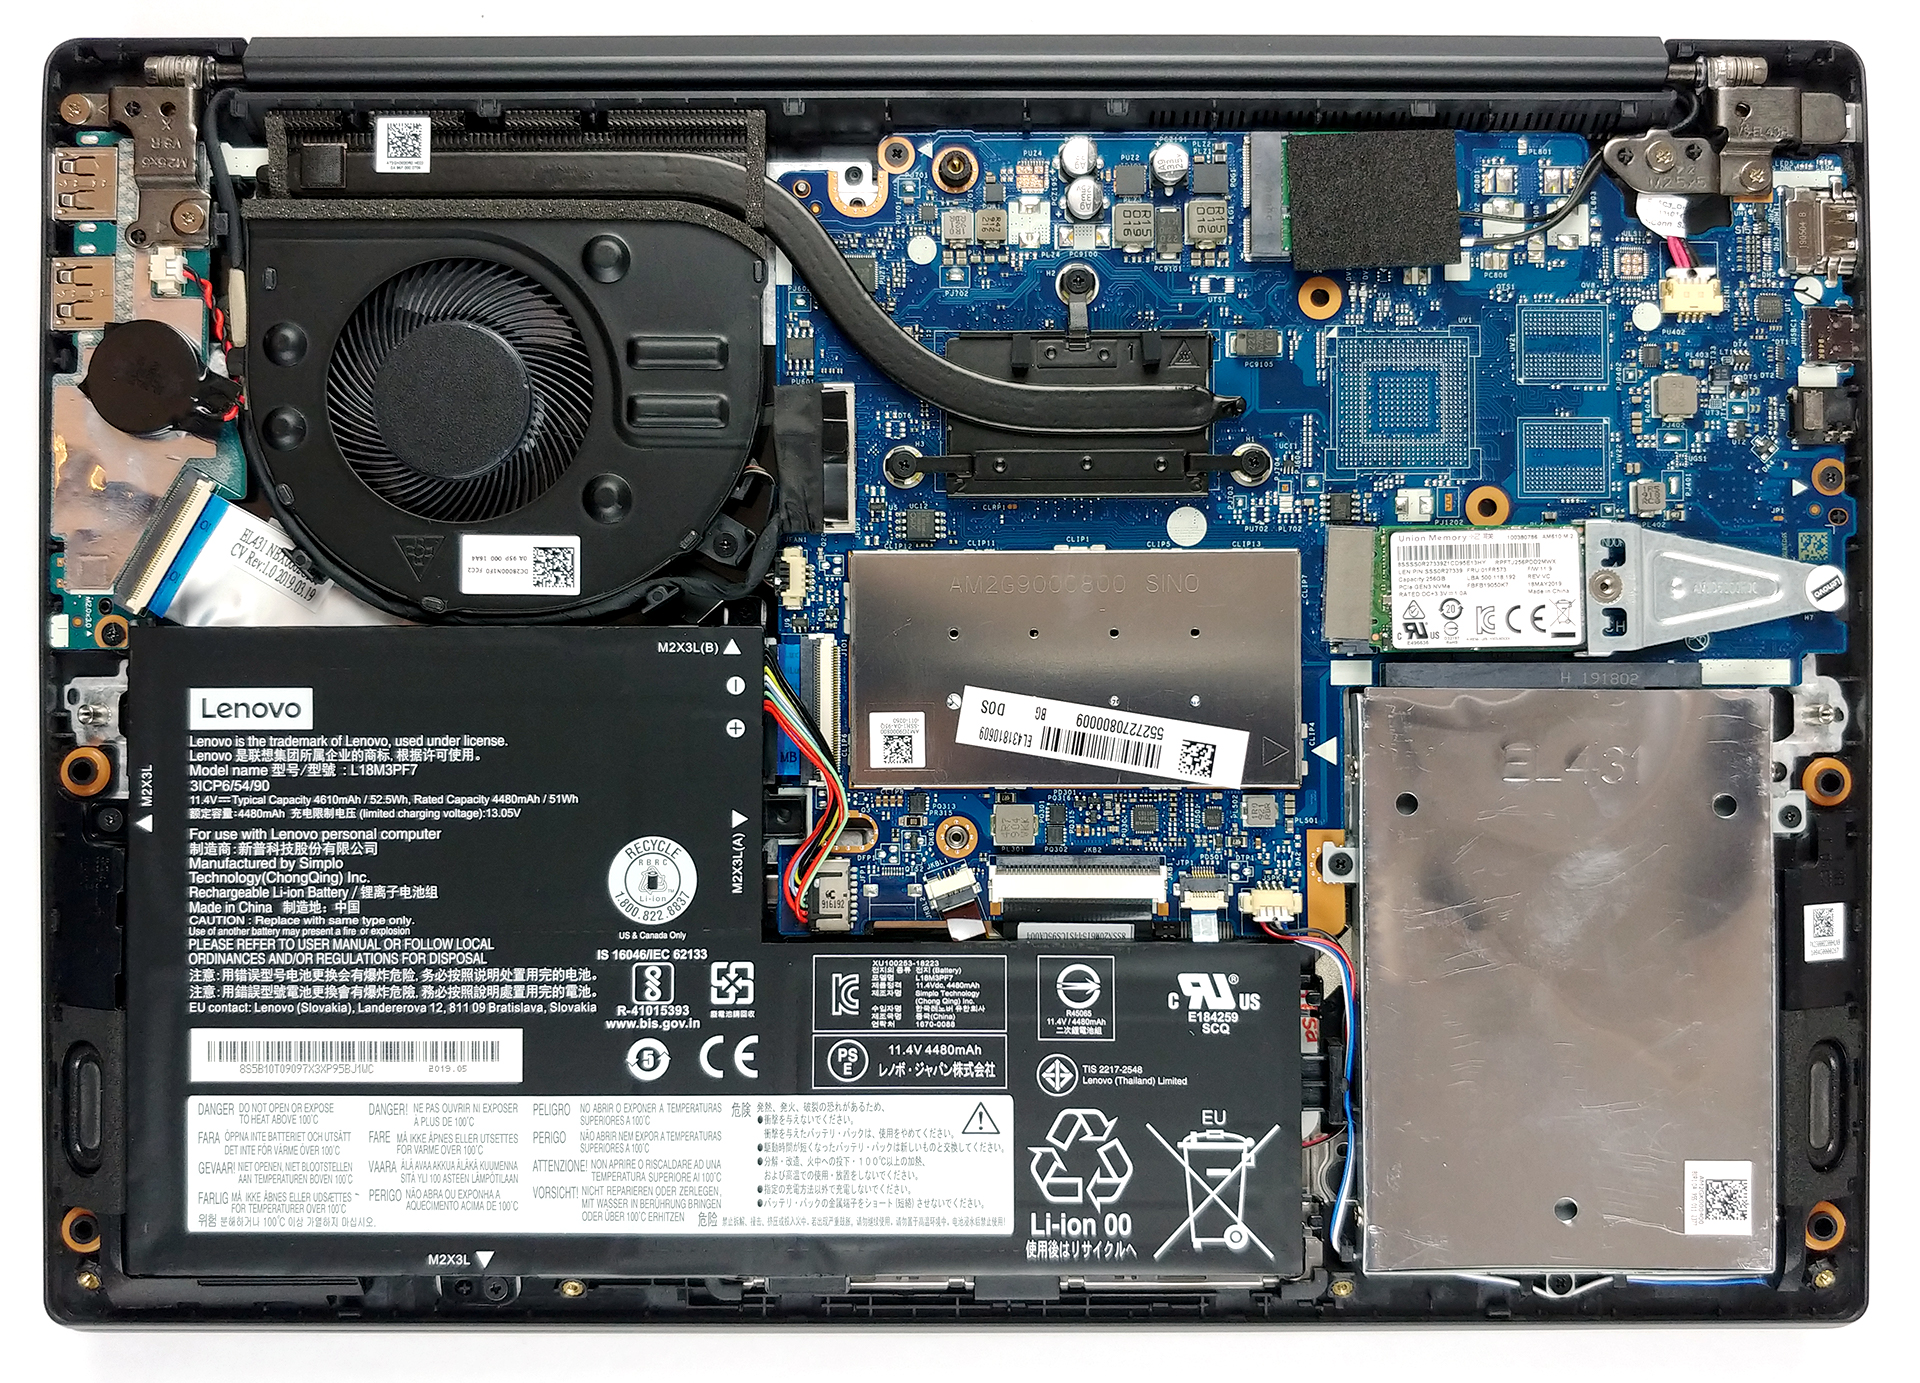 Inside Lenovo Ideapad S340 (14) - disassembly and upgrade options |  